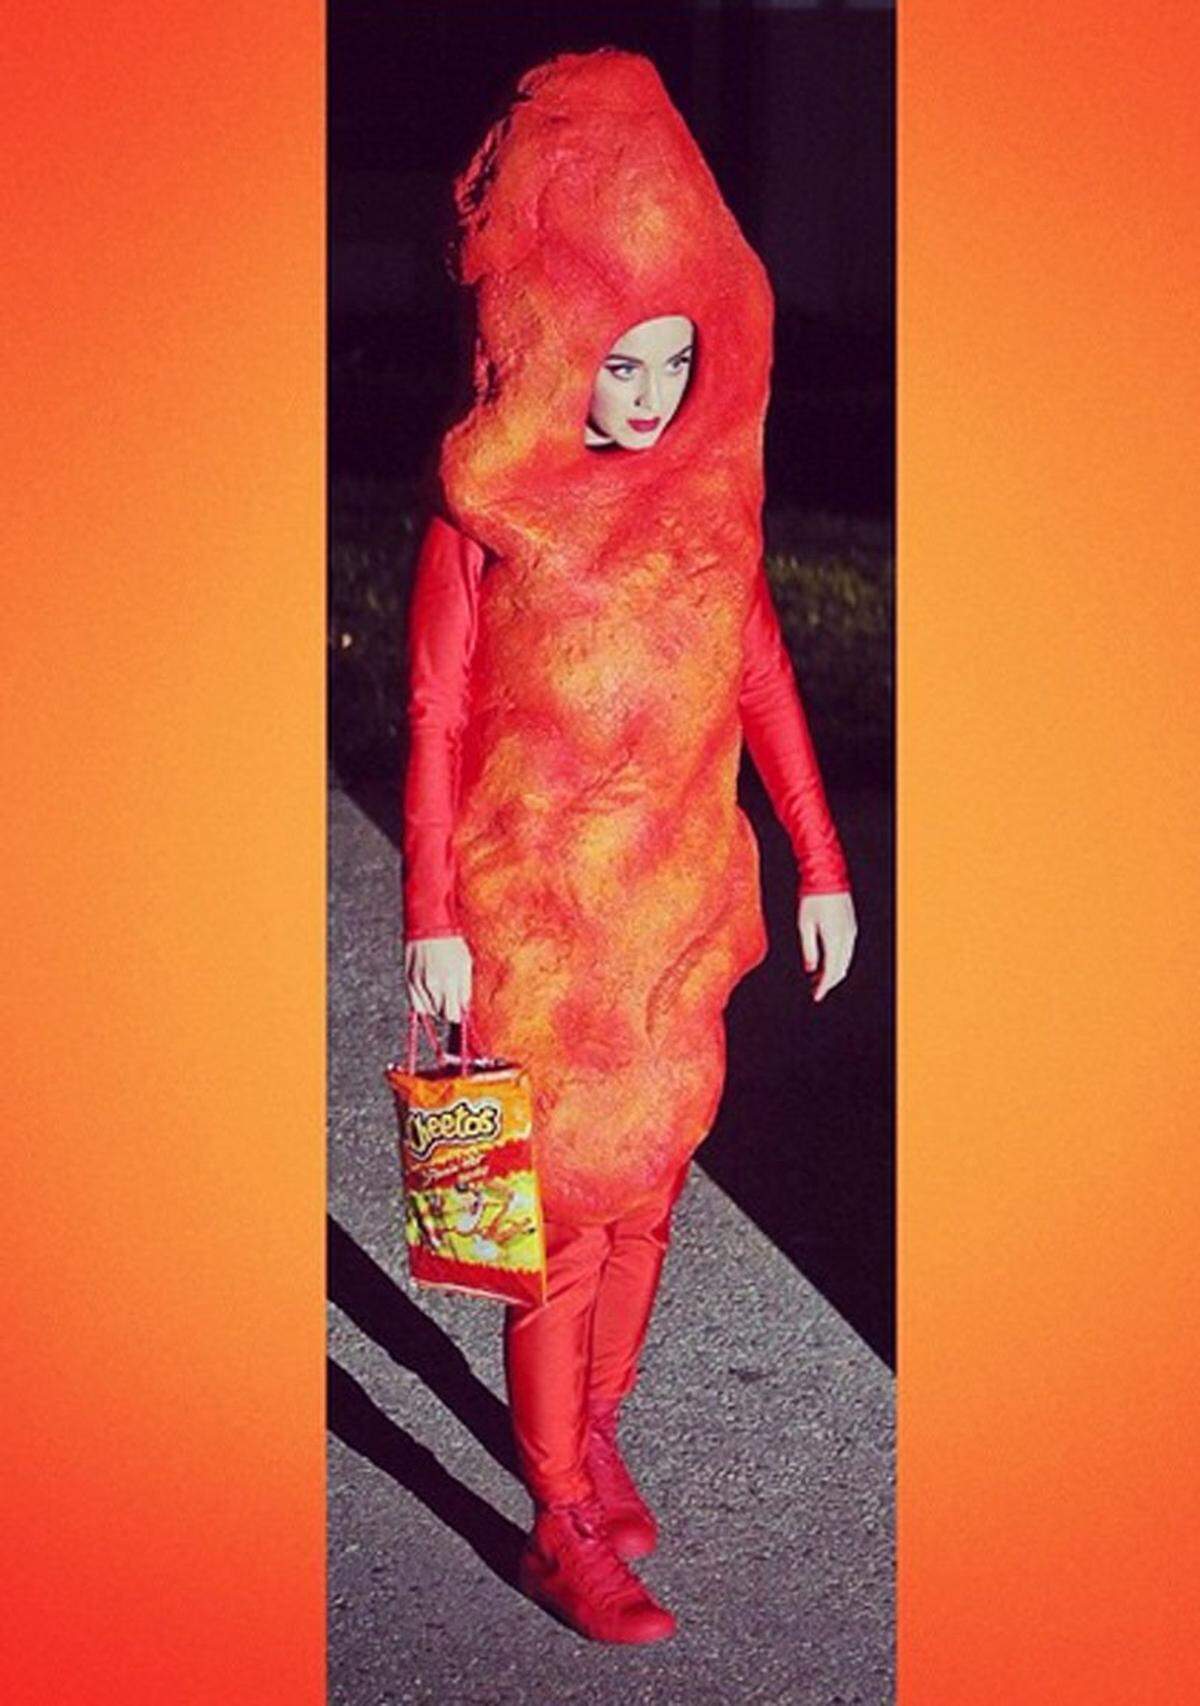 Sängerin Katy Perry isst wohl gerne Cheetos.